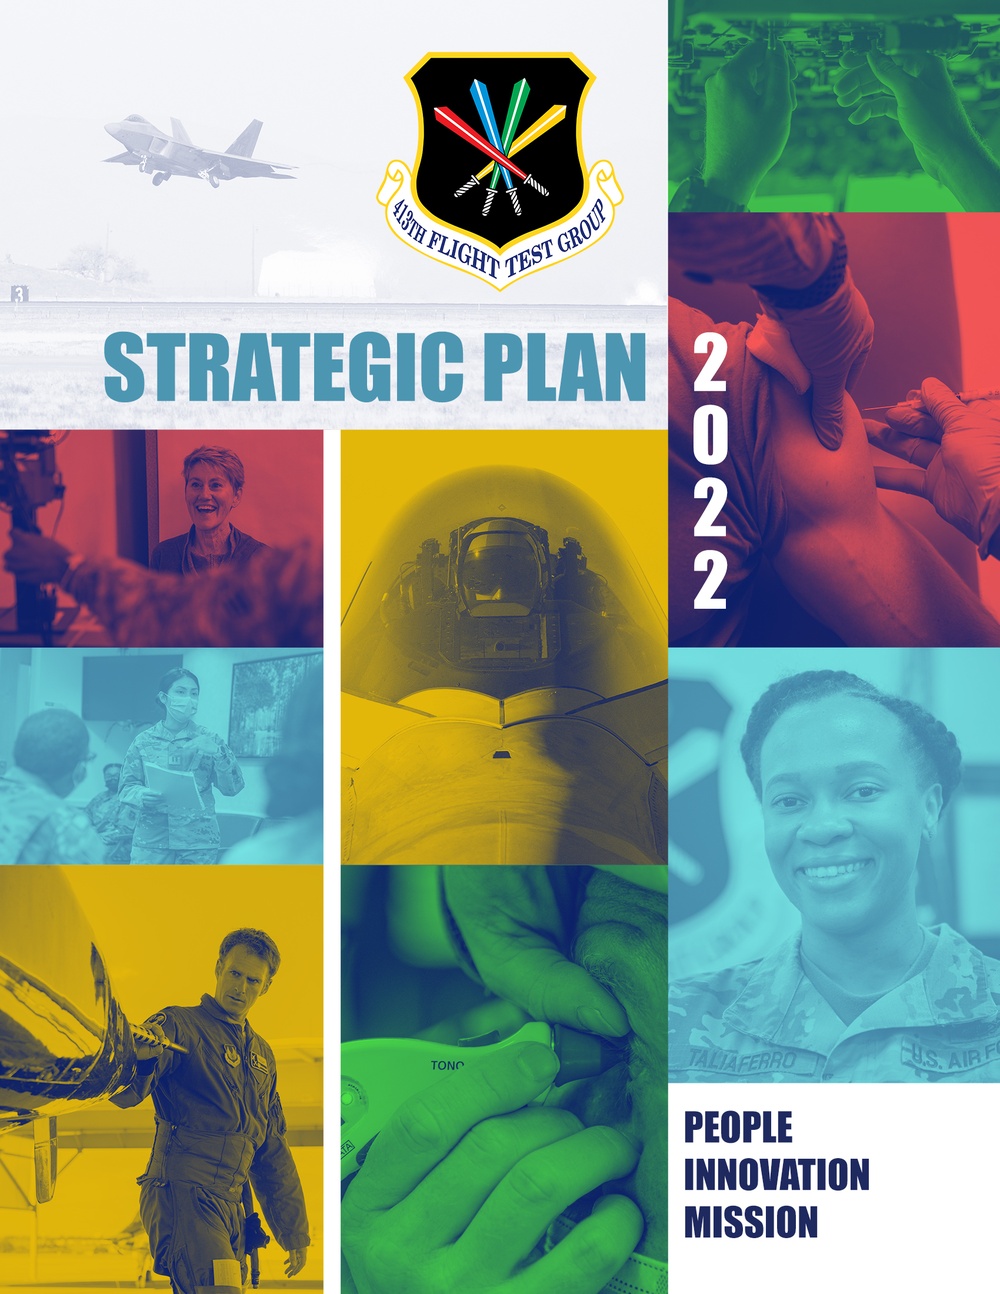 413th FTG strategic plan cover